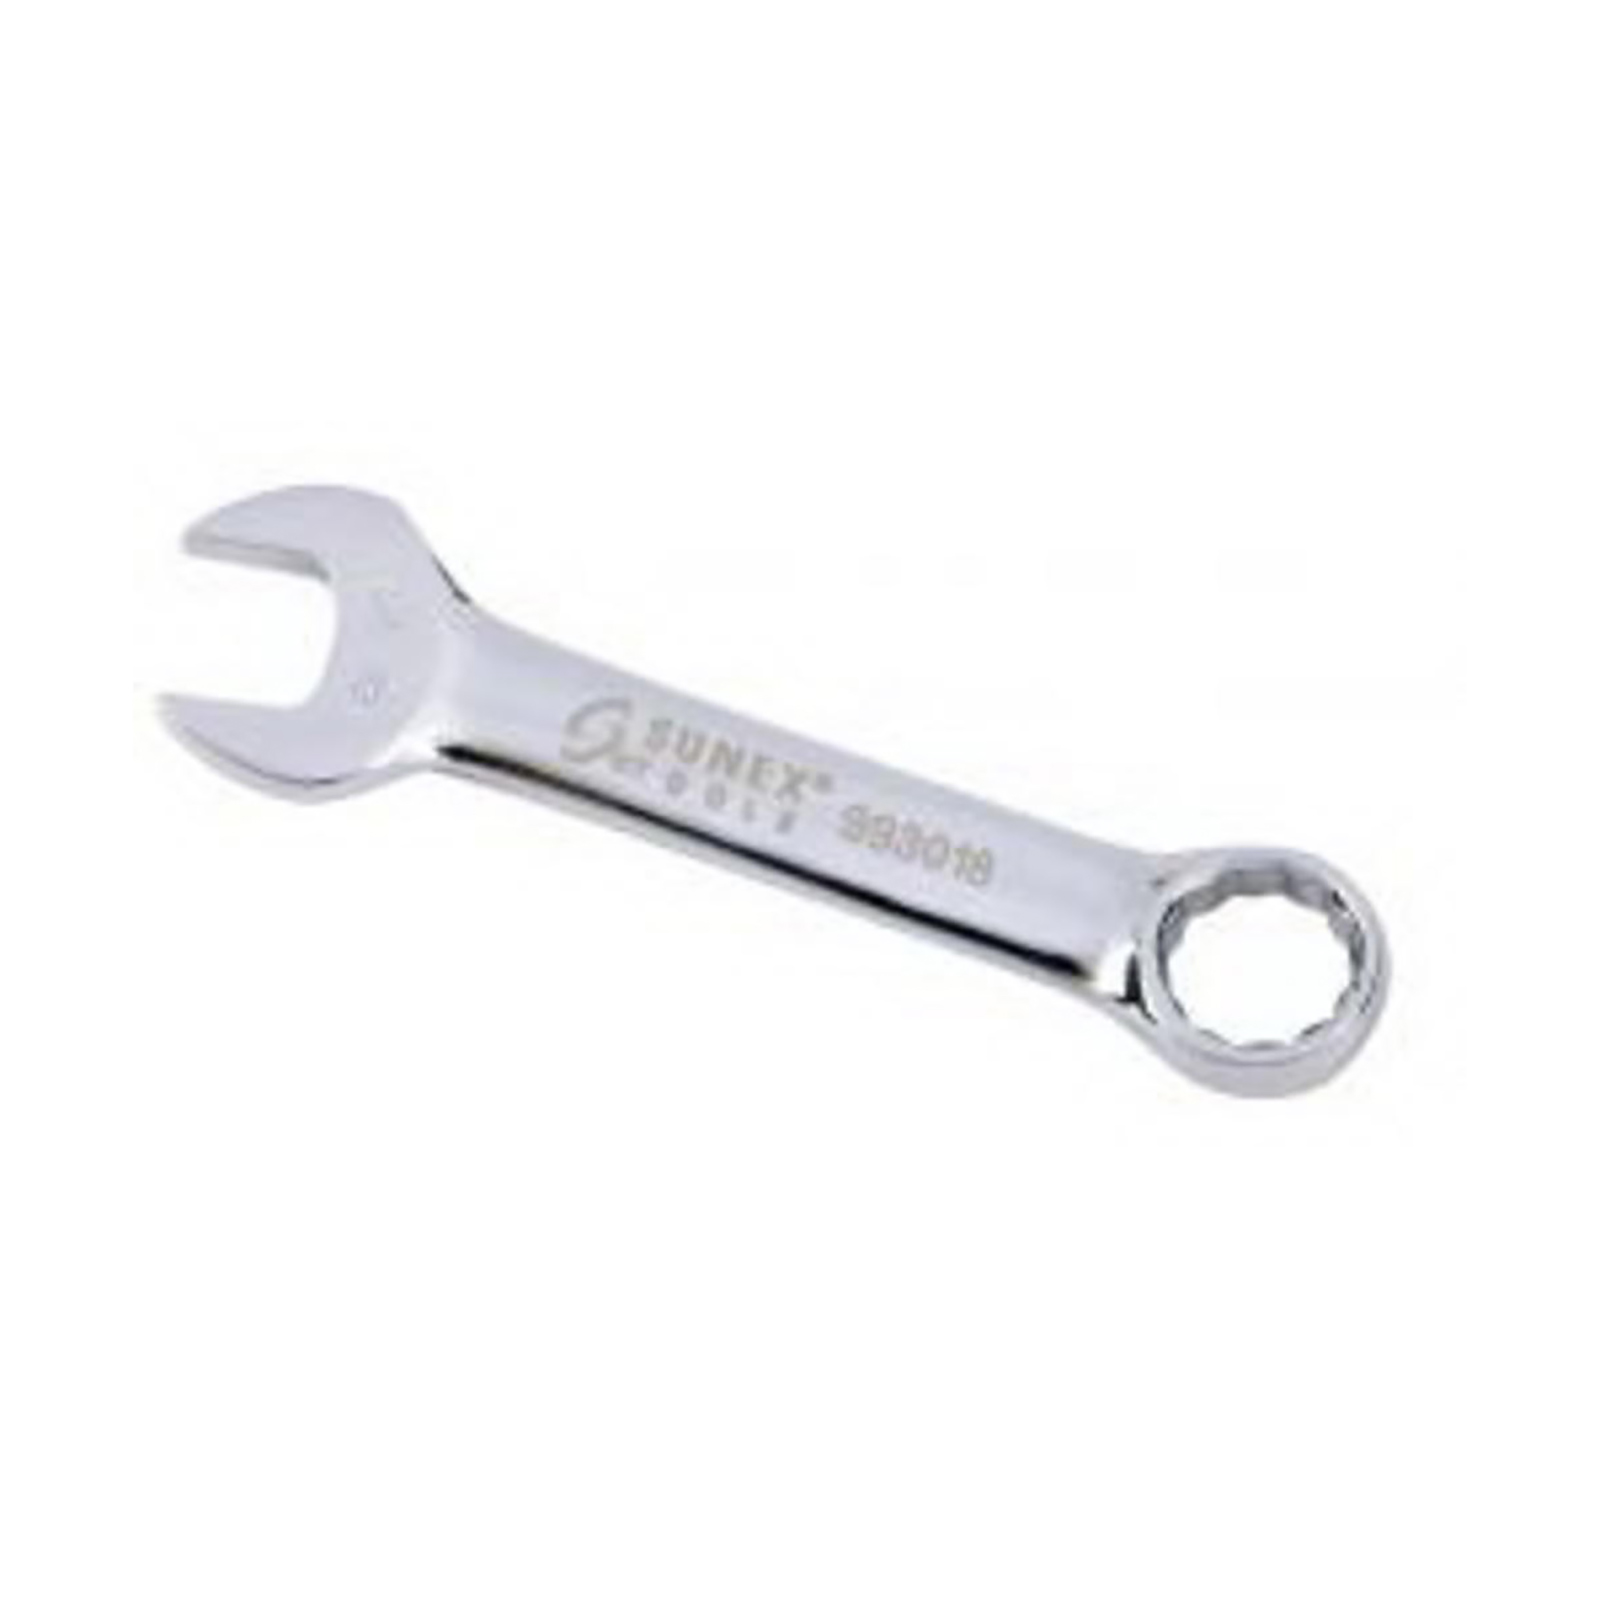 Sunex International 9/16" Stubby Combination Wrench